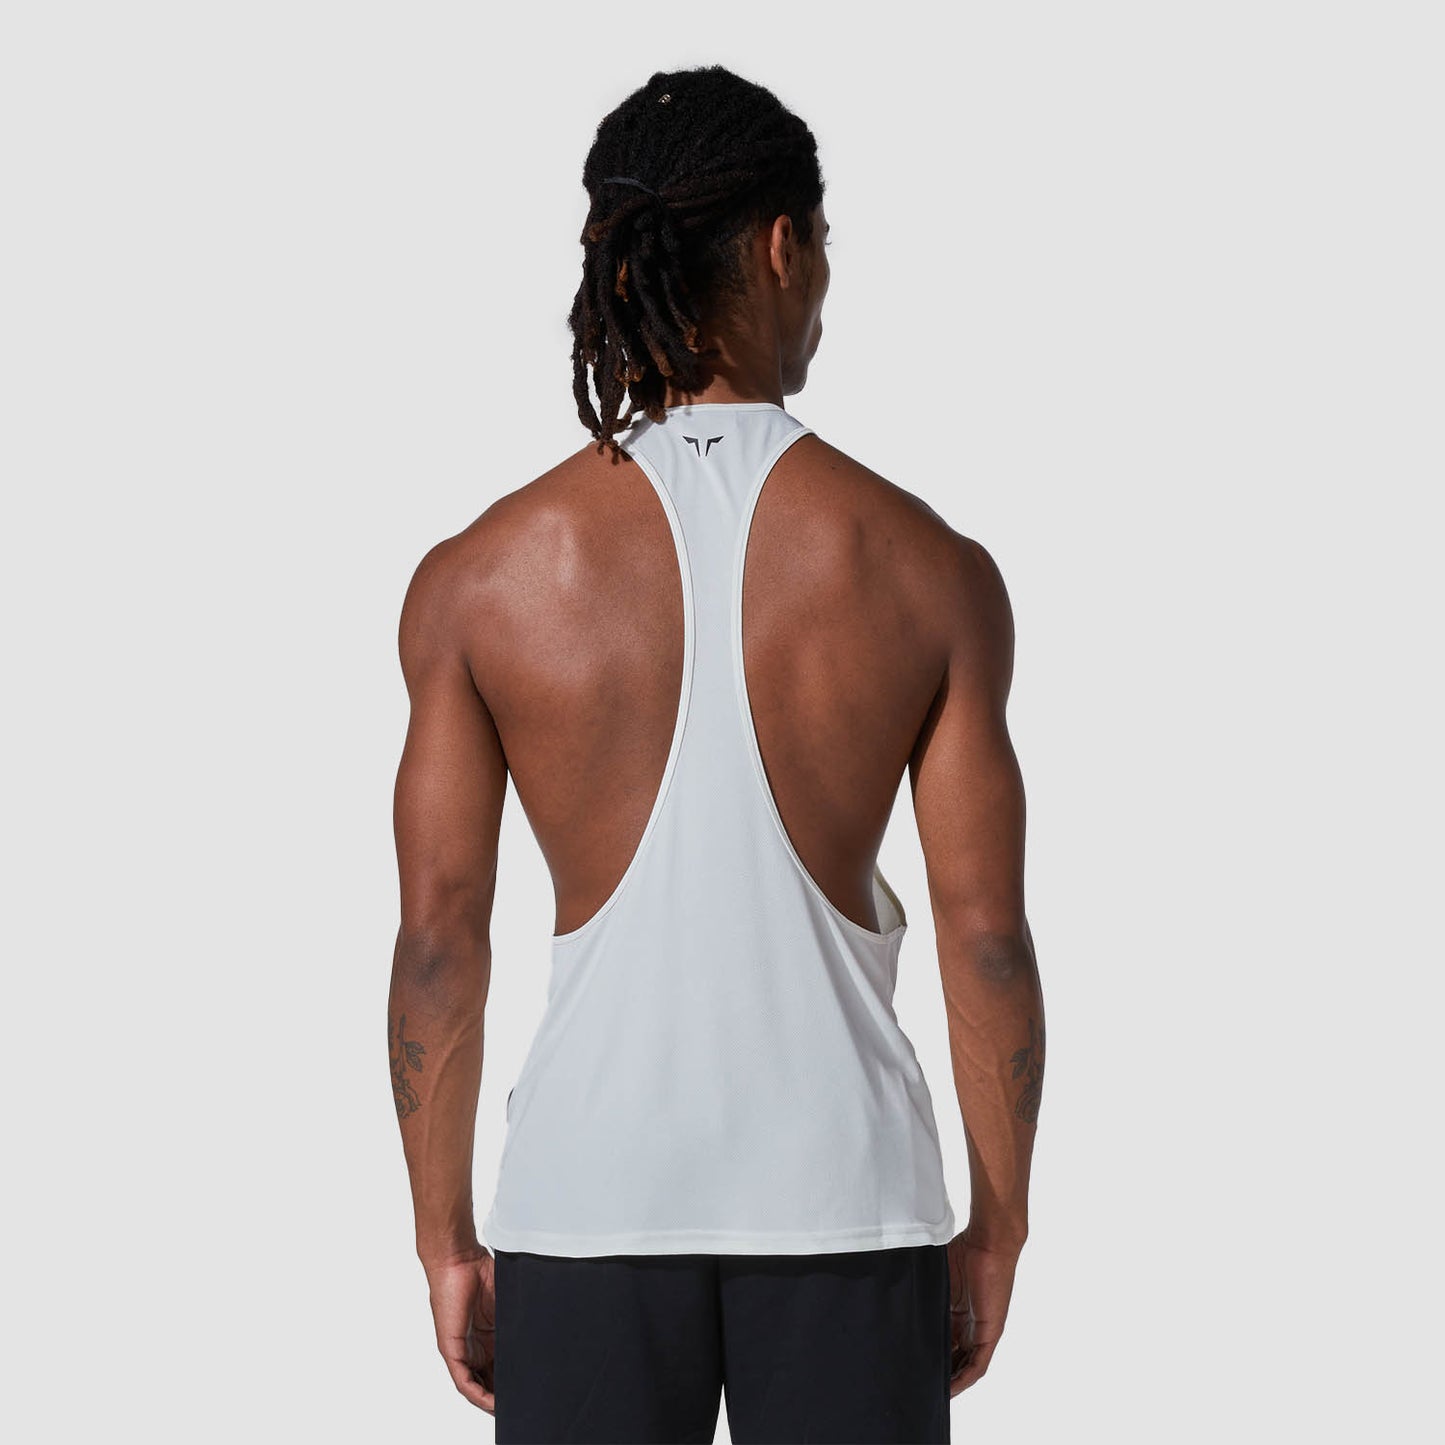 squatwolf-gym-wear-graphic-wave-eyes-stringer-white-workout-stringers-vests-for-men